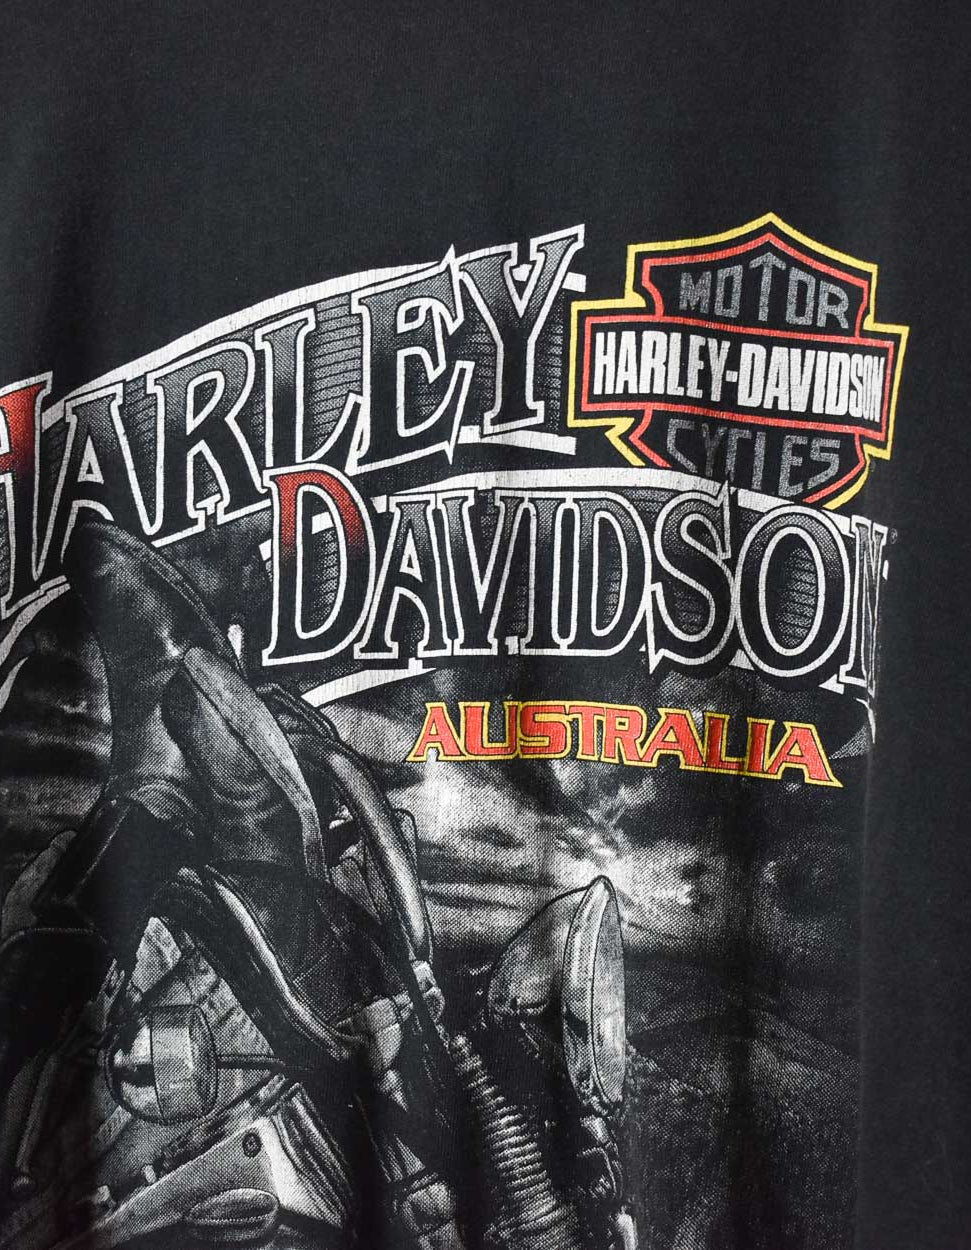 Black Harley Davidson Australia No Worries Graphic T-Shirt - Large